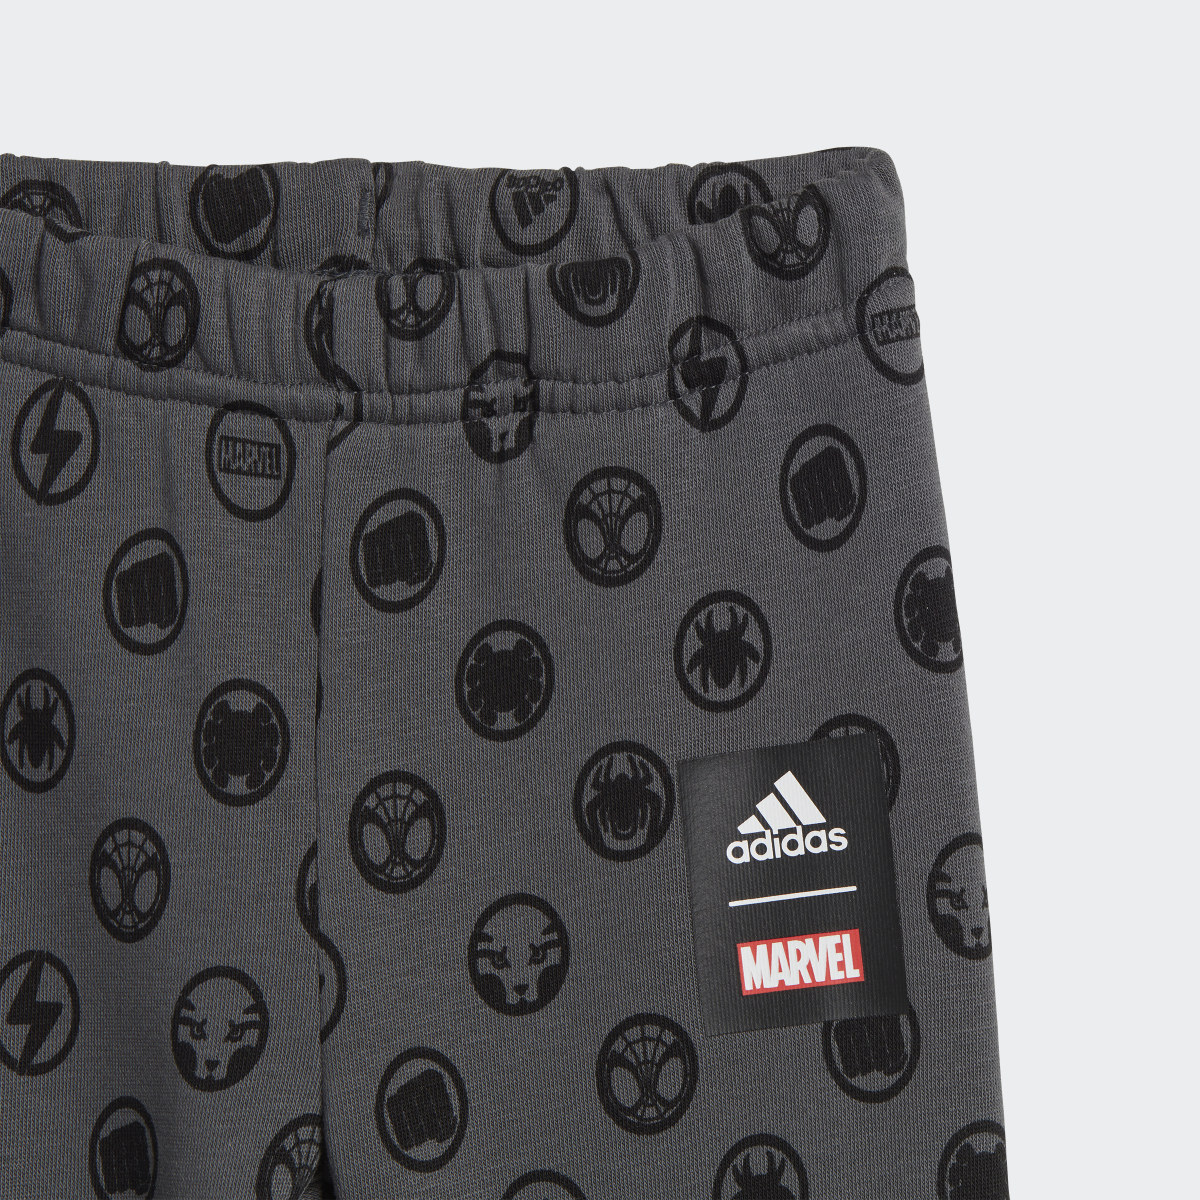 Adidas Completo adidas x Marvel Spider-Man Joggers. 9